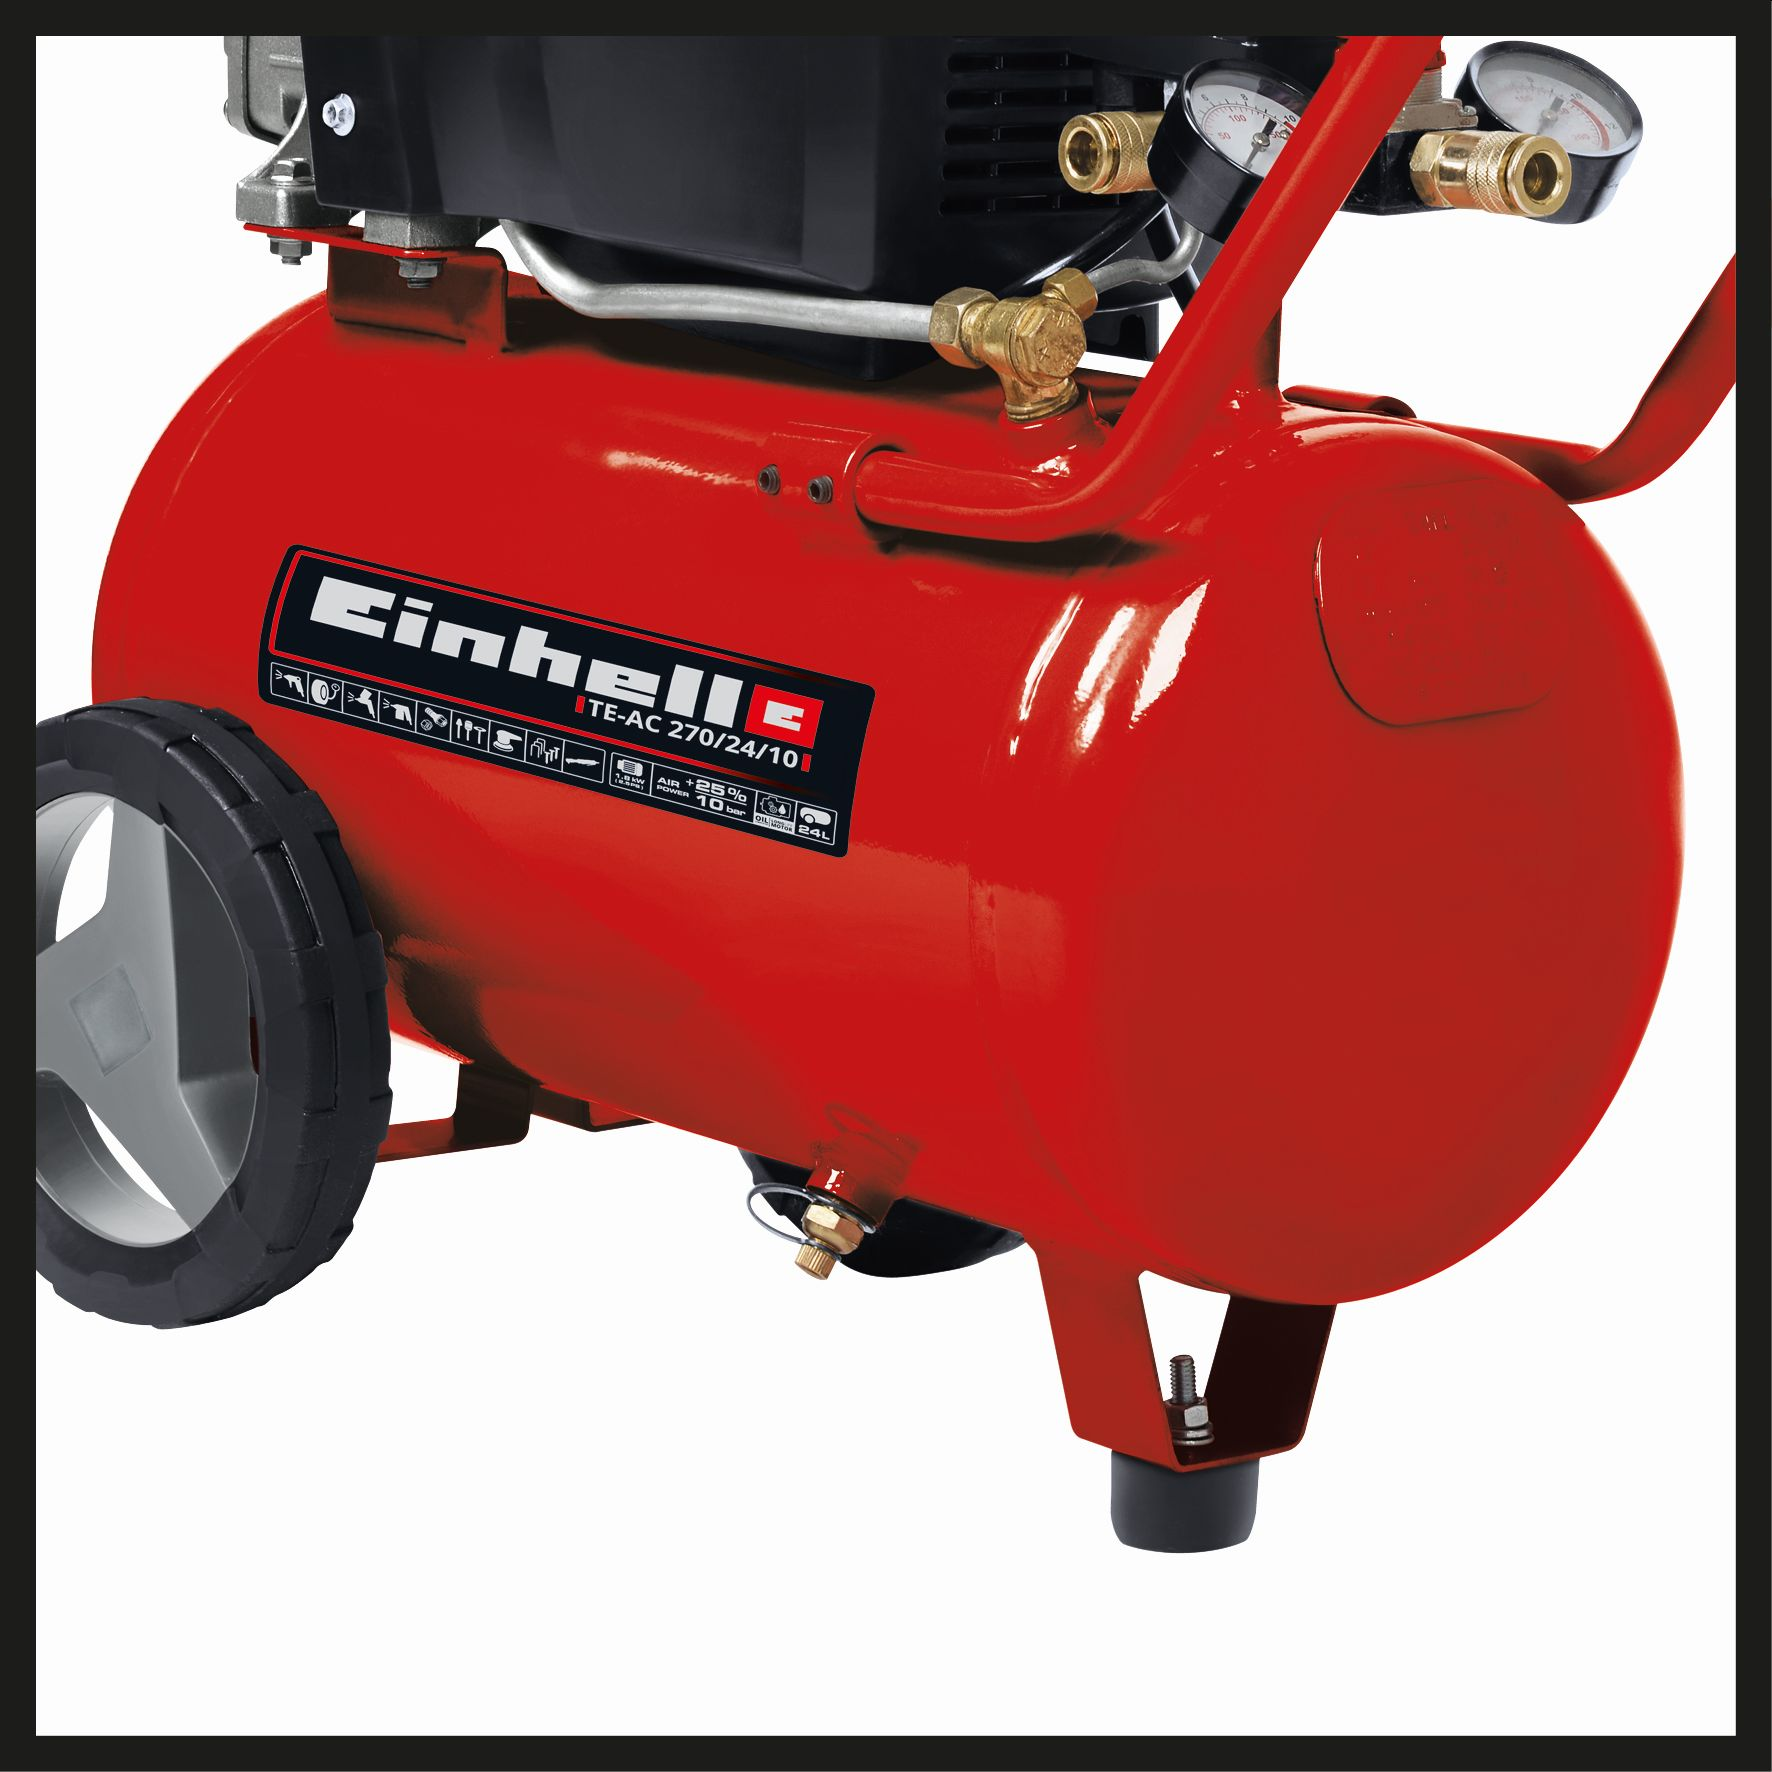 EINHELL TE-AC 270/24/10 Kompressor, Rot